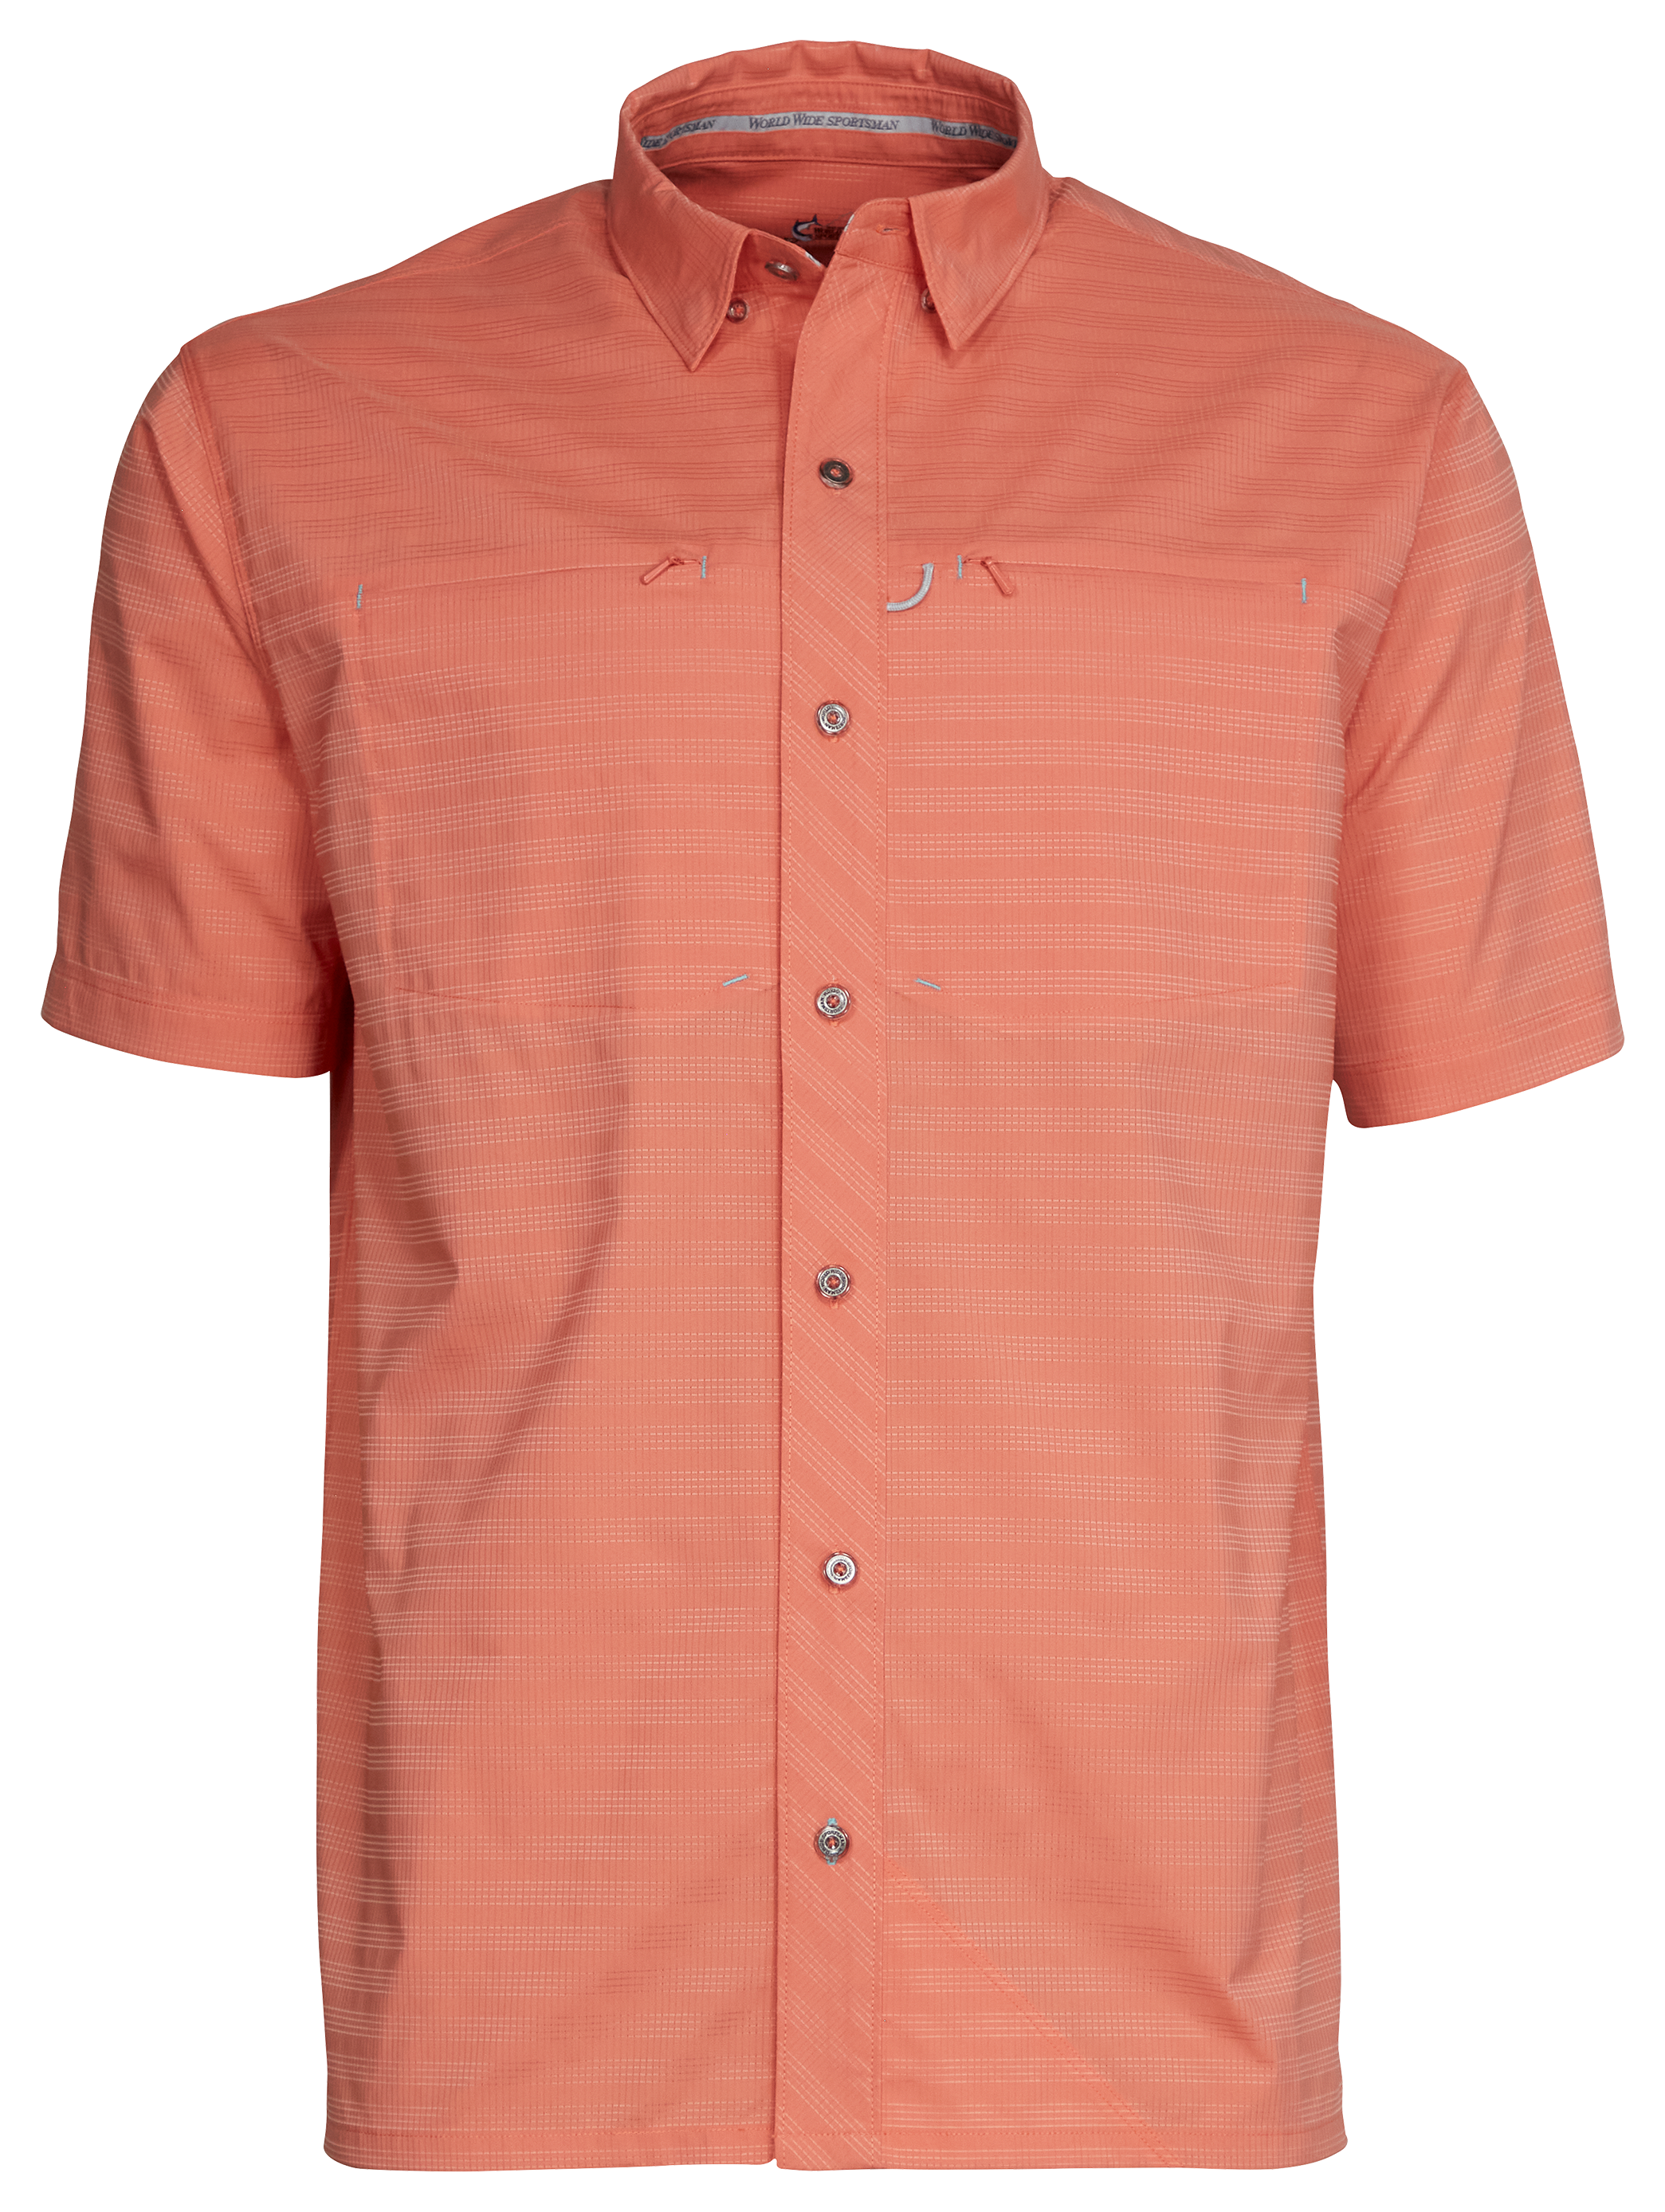 World Wide Sportsman Seacrest 2-Pocket Short-Sleeve Button-Down Shirt for Men - Crabapple - 3XL